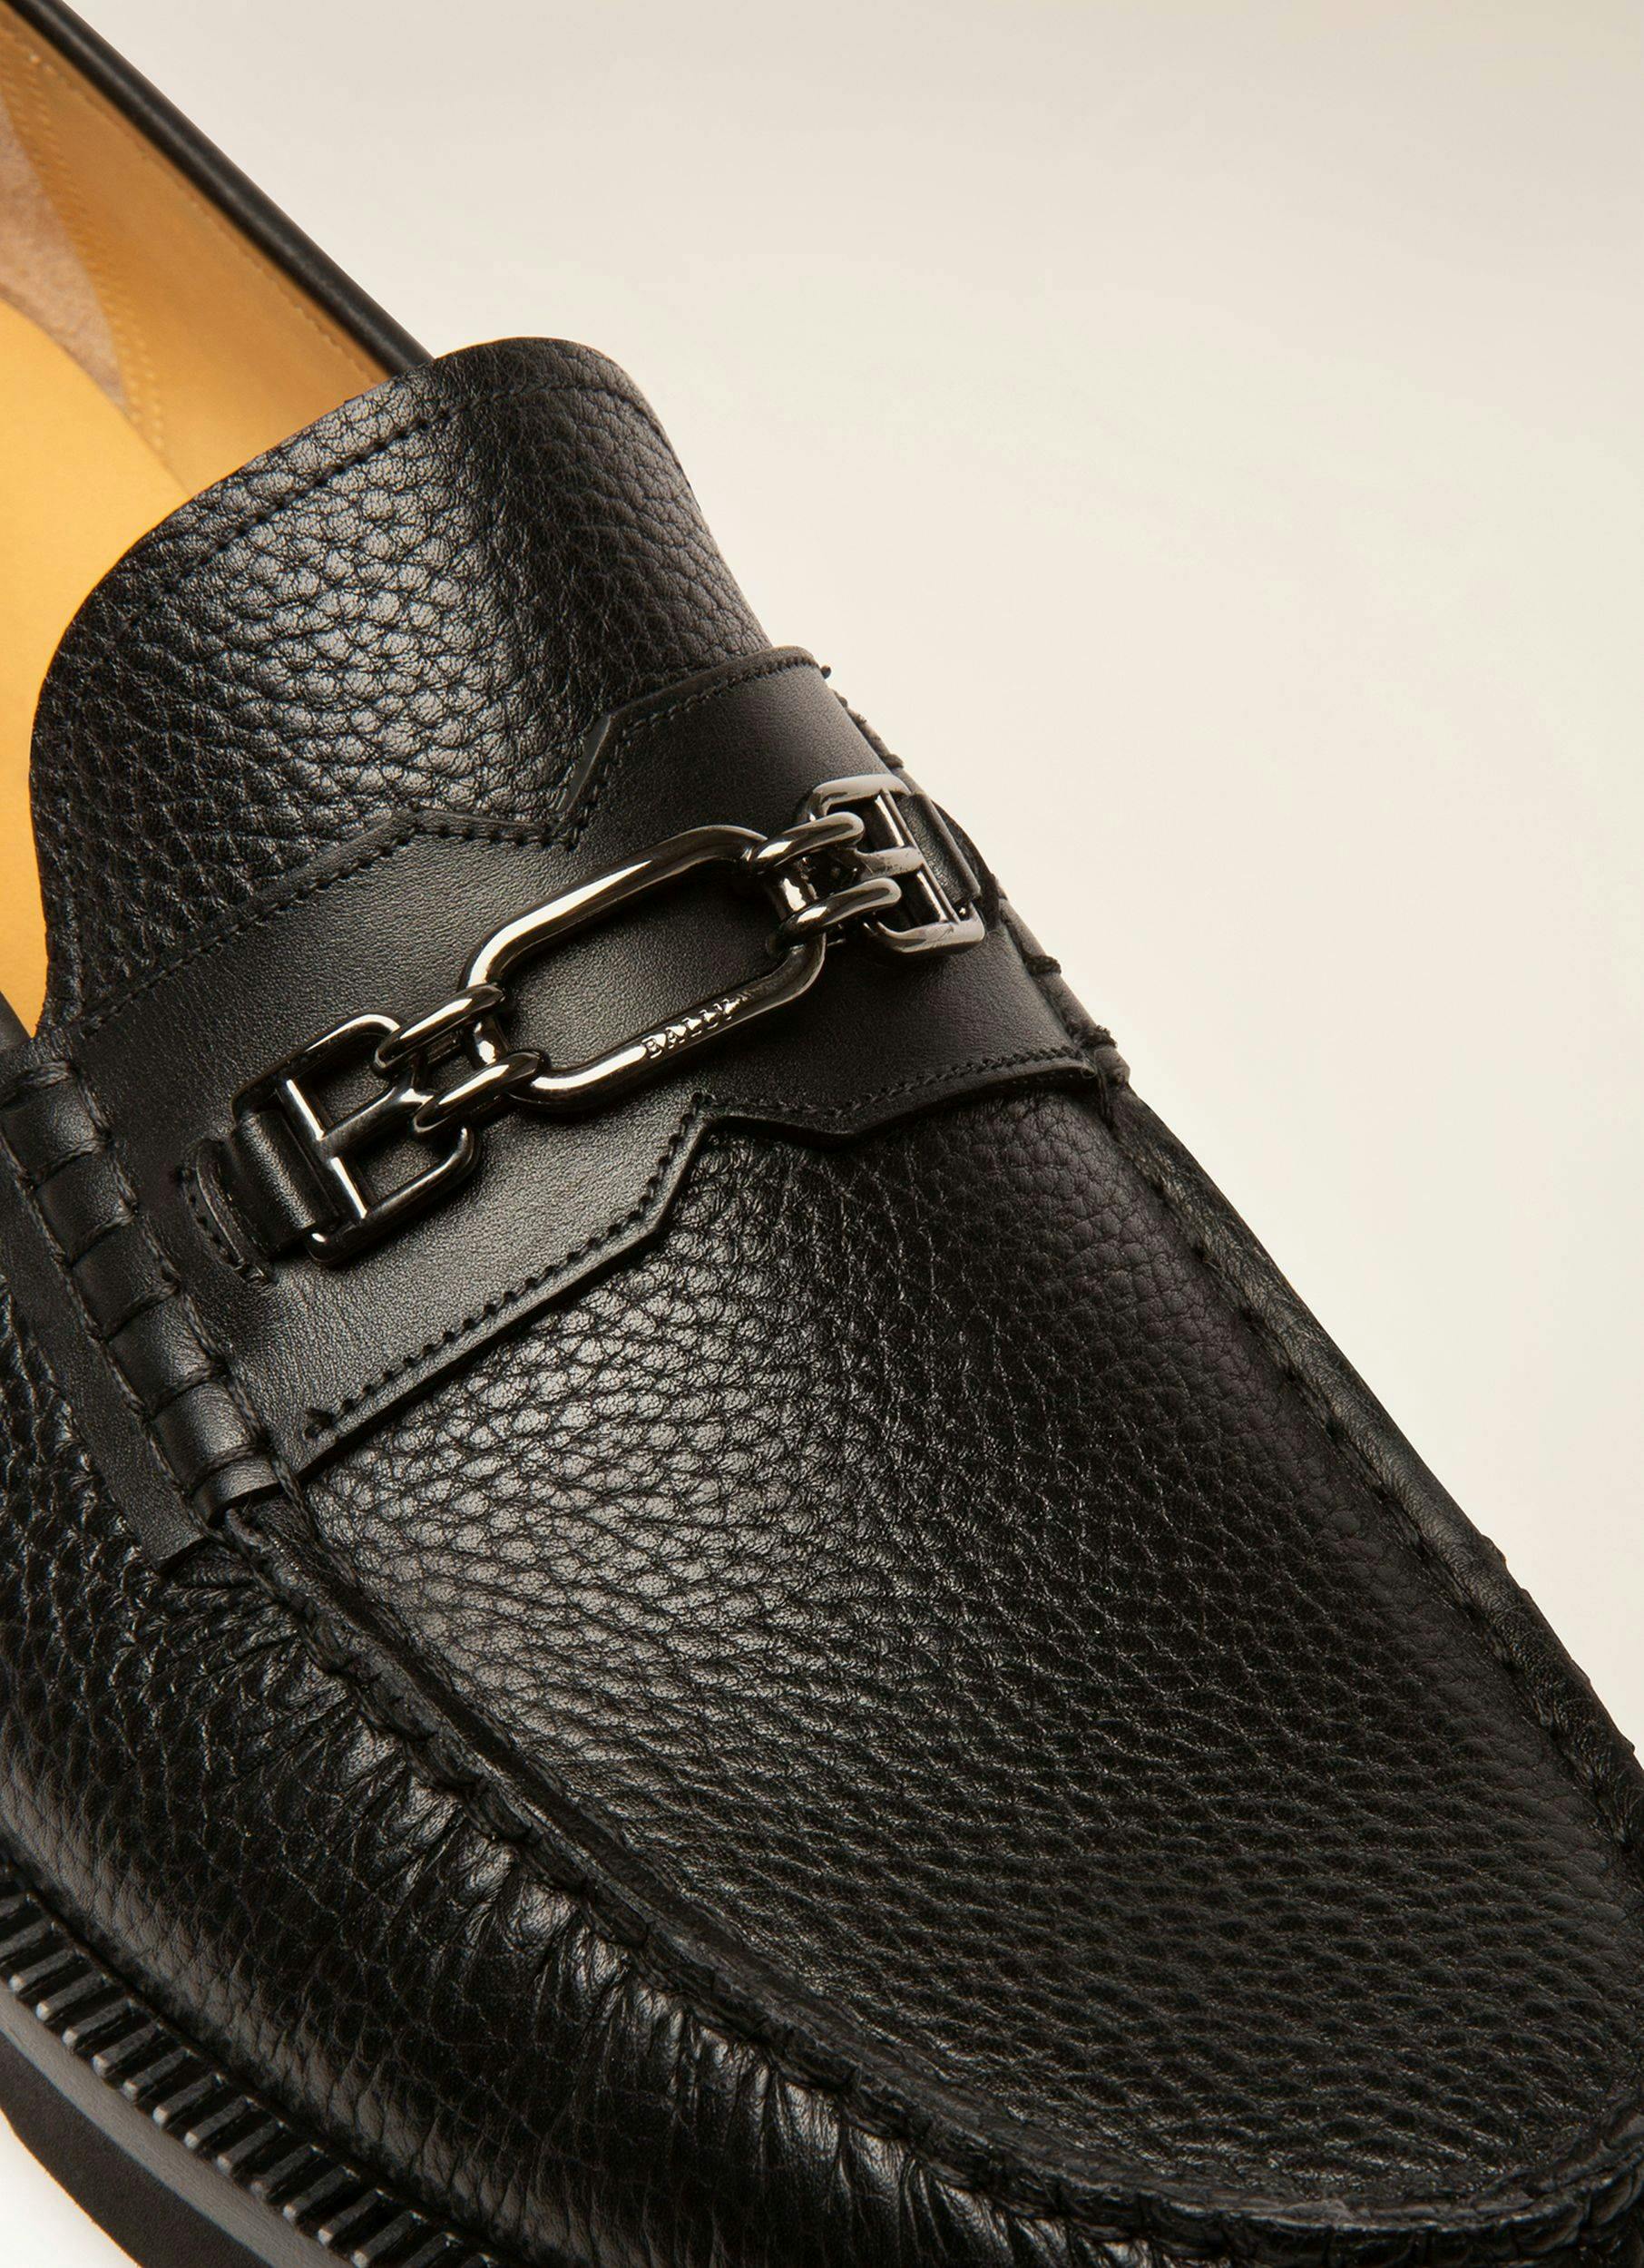 NOTTINGHAM Leather Loafers In Black - Men's - Bally - 02